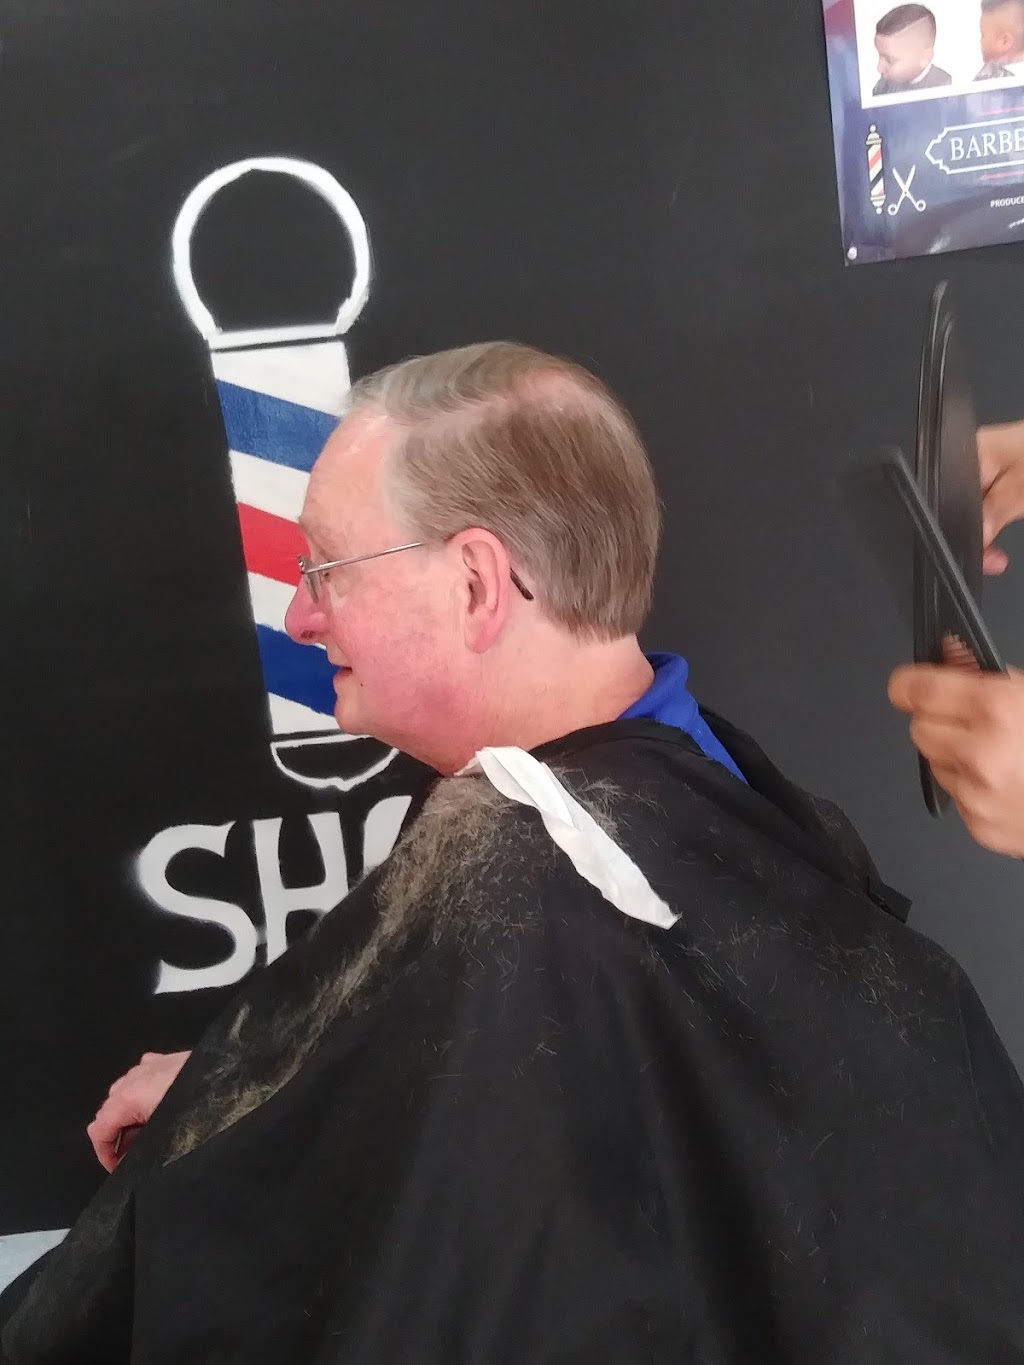 Shalom barber shop | 280 Ethan Allen Hwy, Ridgefield, CT 06877 | Phone: (203) 403-0021